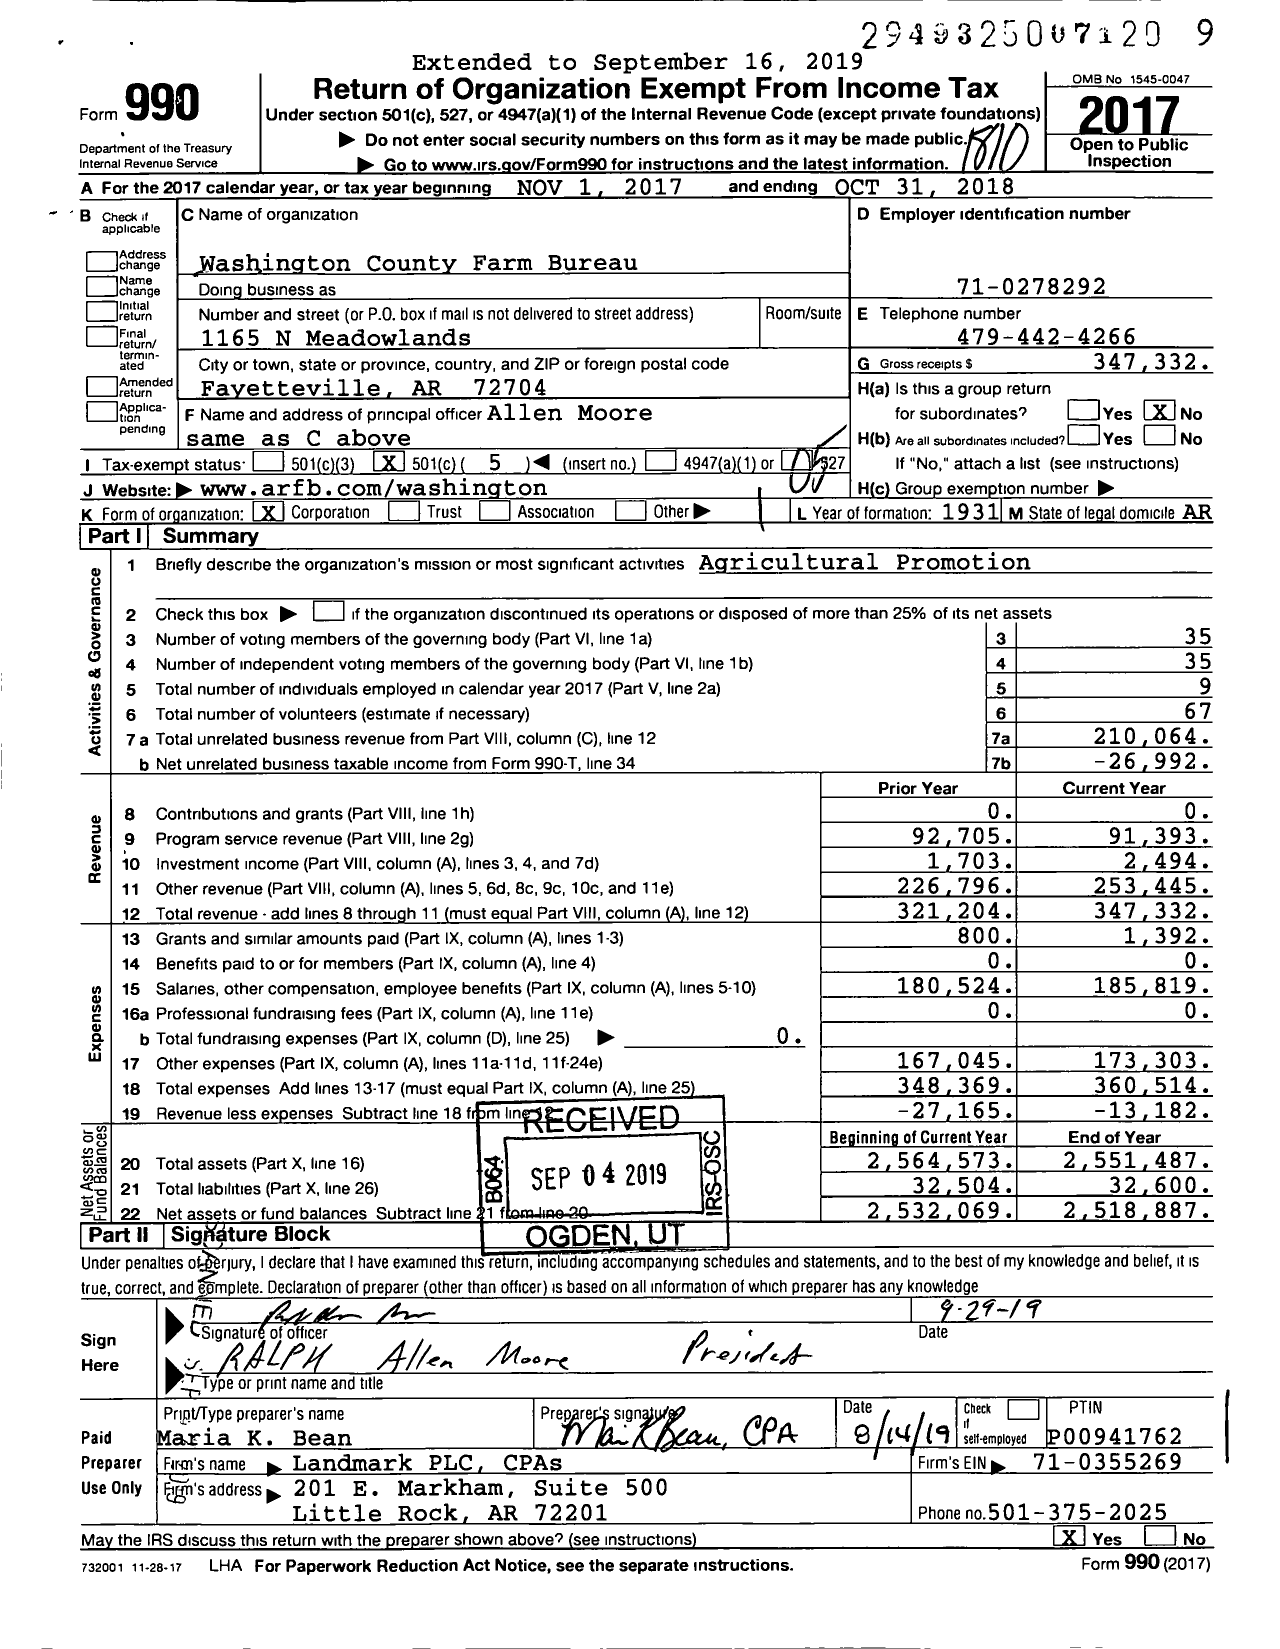 Image of first page of 2017 Form 990O for Washington County Farm Bureau